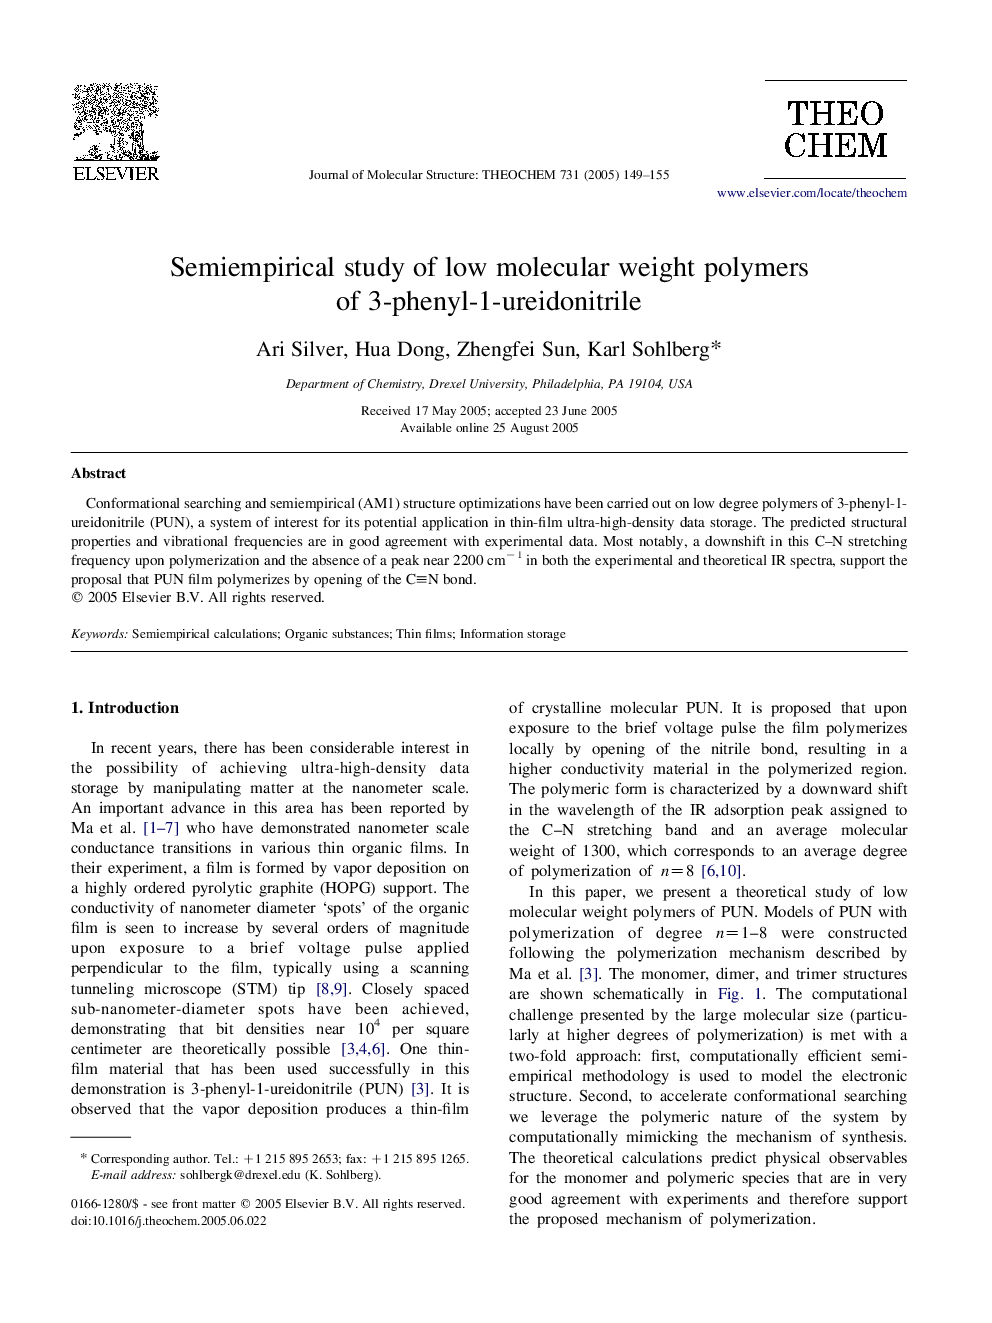 Semiempirical study of low molecular weight polymers of 3-phenyl-1-ureidonitrile